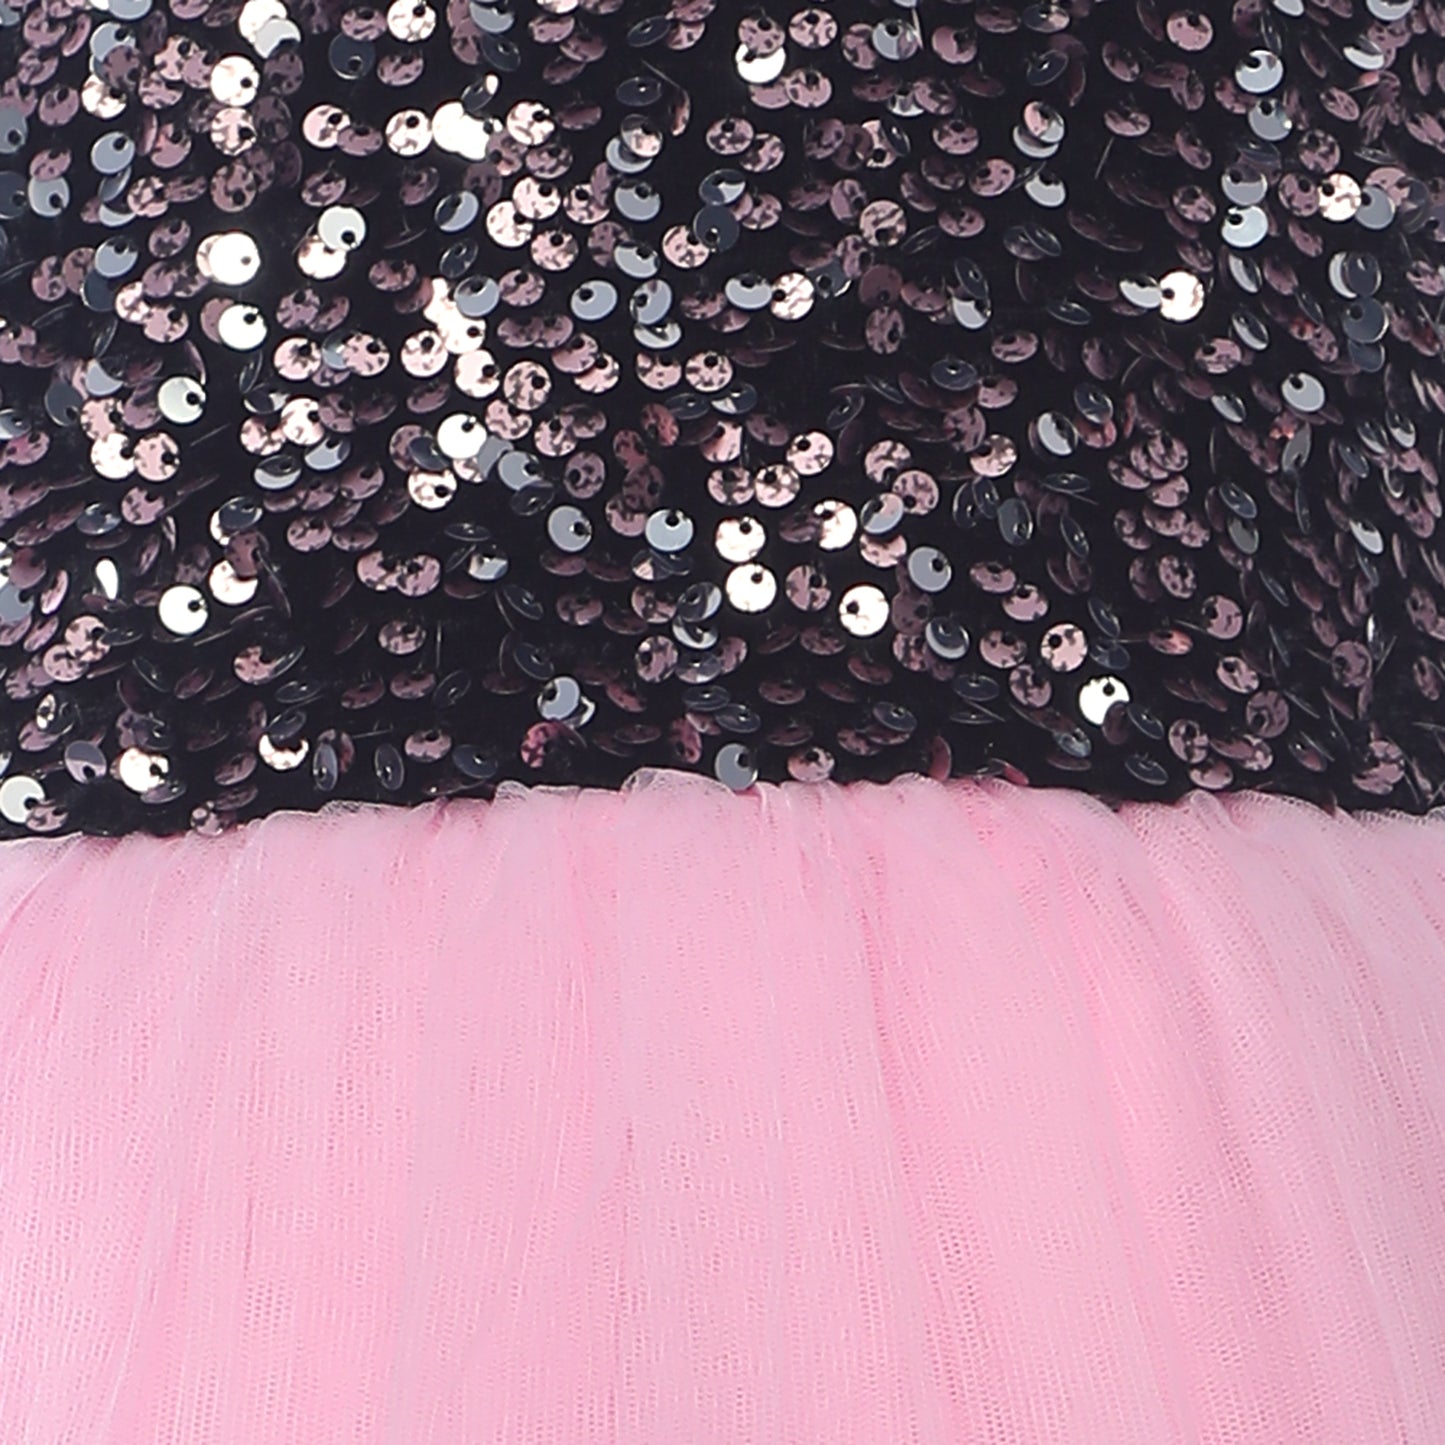 Black & Pink Glitter Dress - Perfect for Birthday Parties, Weddings Flower Girls